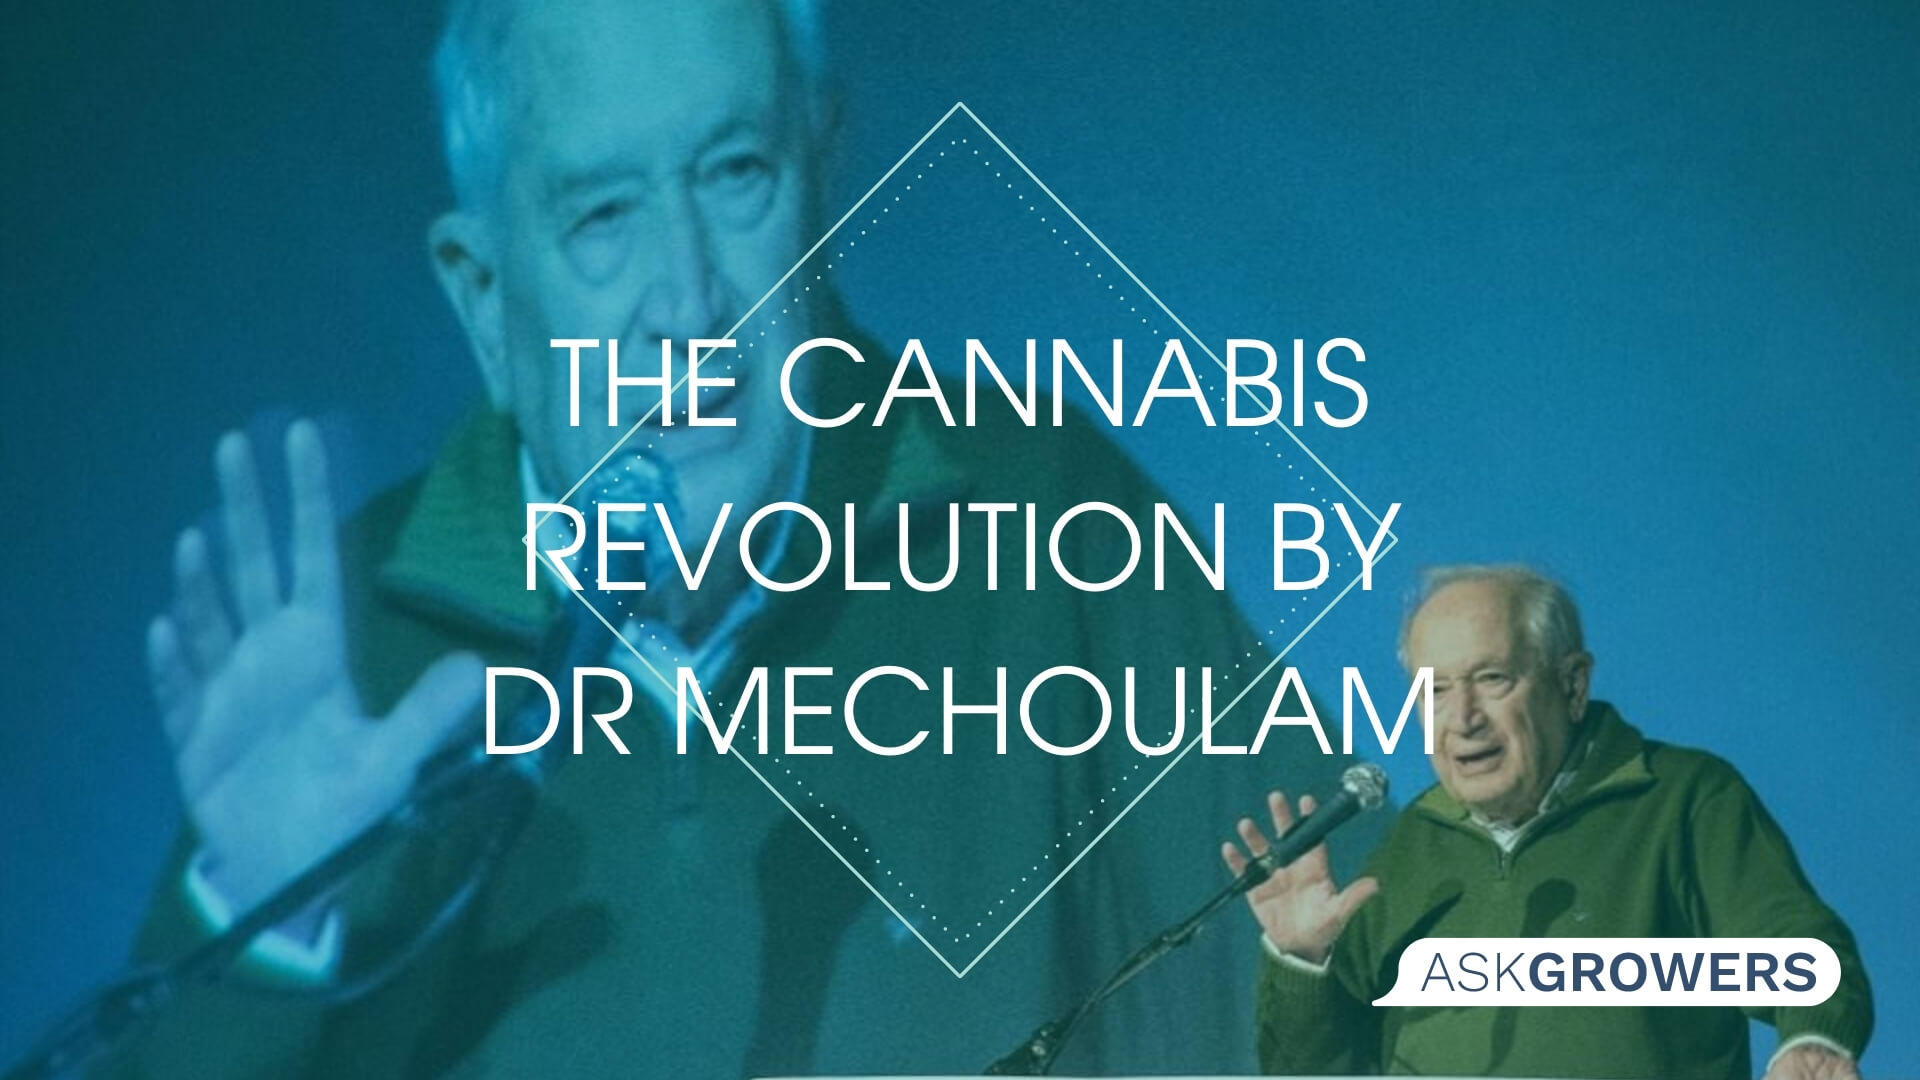 The Cannabis Revolution by Dr. Raphael Mechoulam